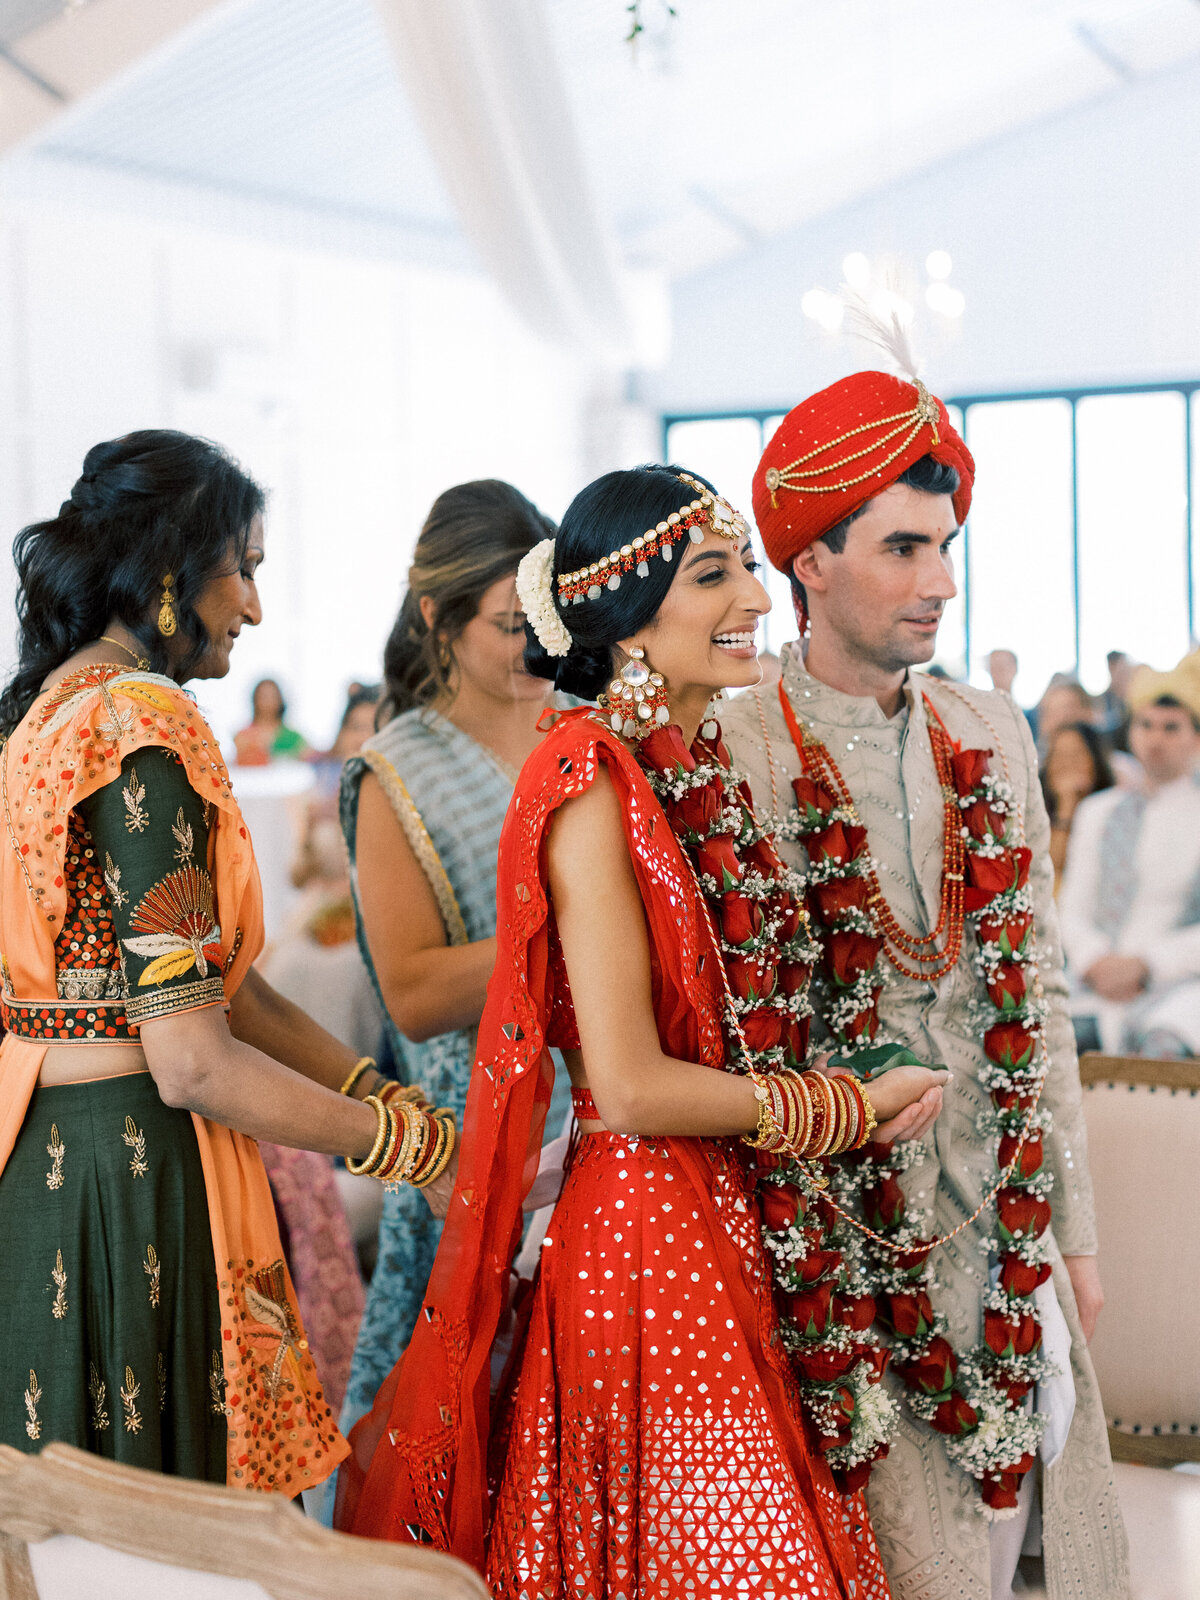 Prianka + Alex - Hindu Wedding 10 - Ceremony 5